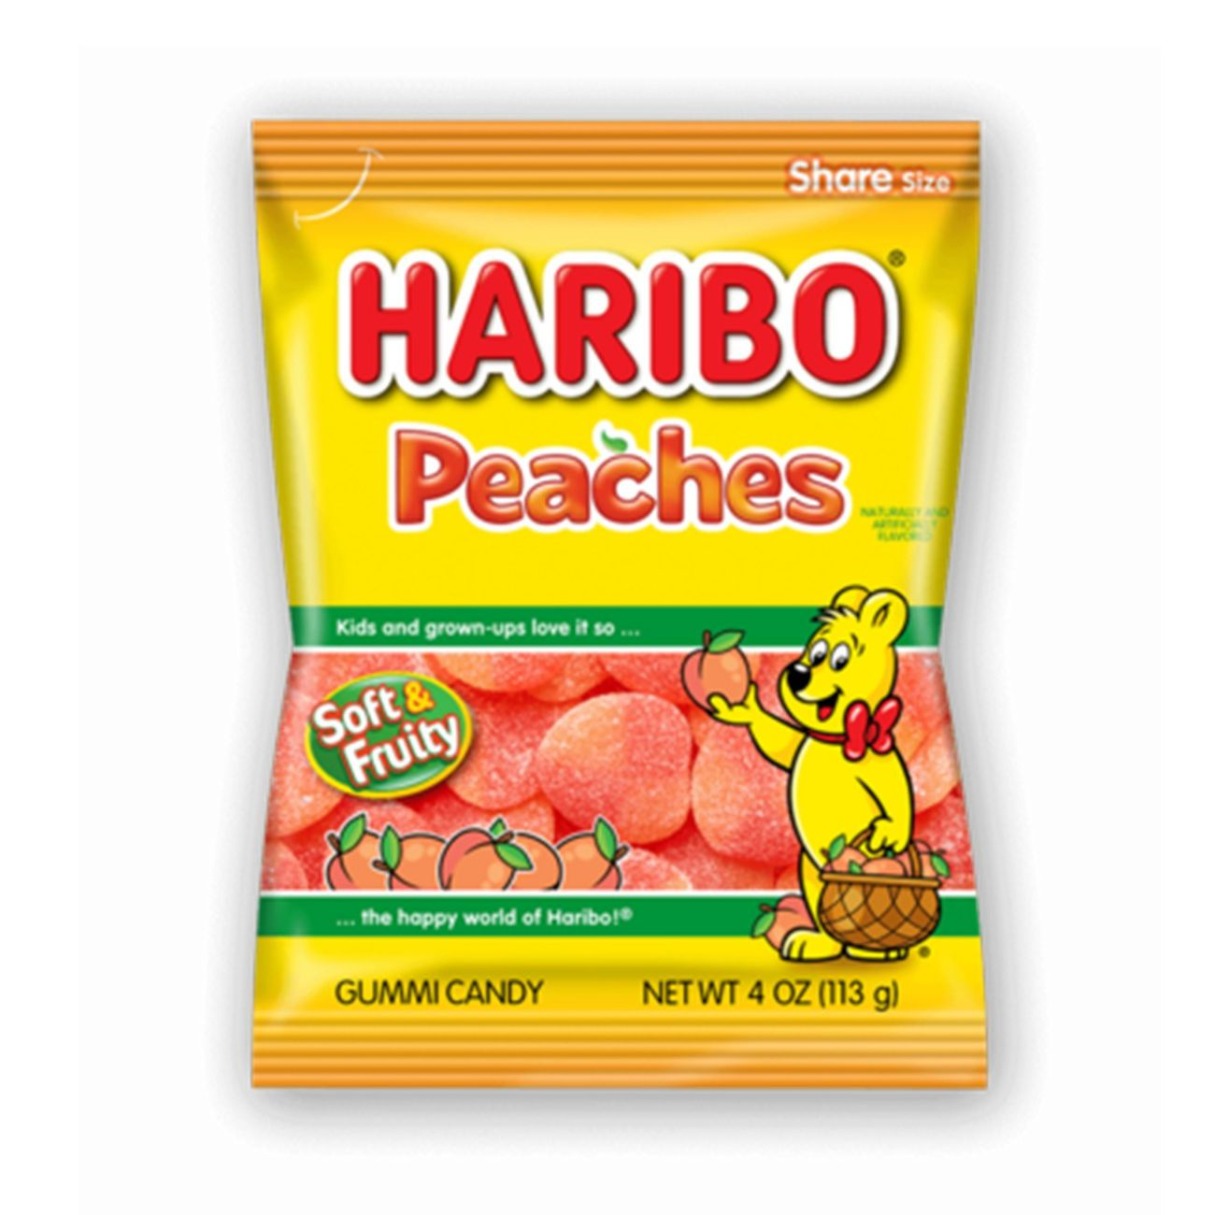 Haribo Peaches Gummi Candy 5oz -12ct